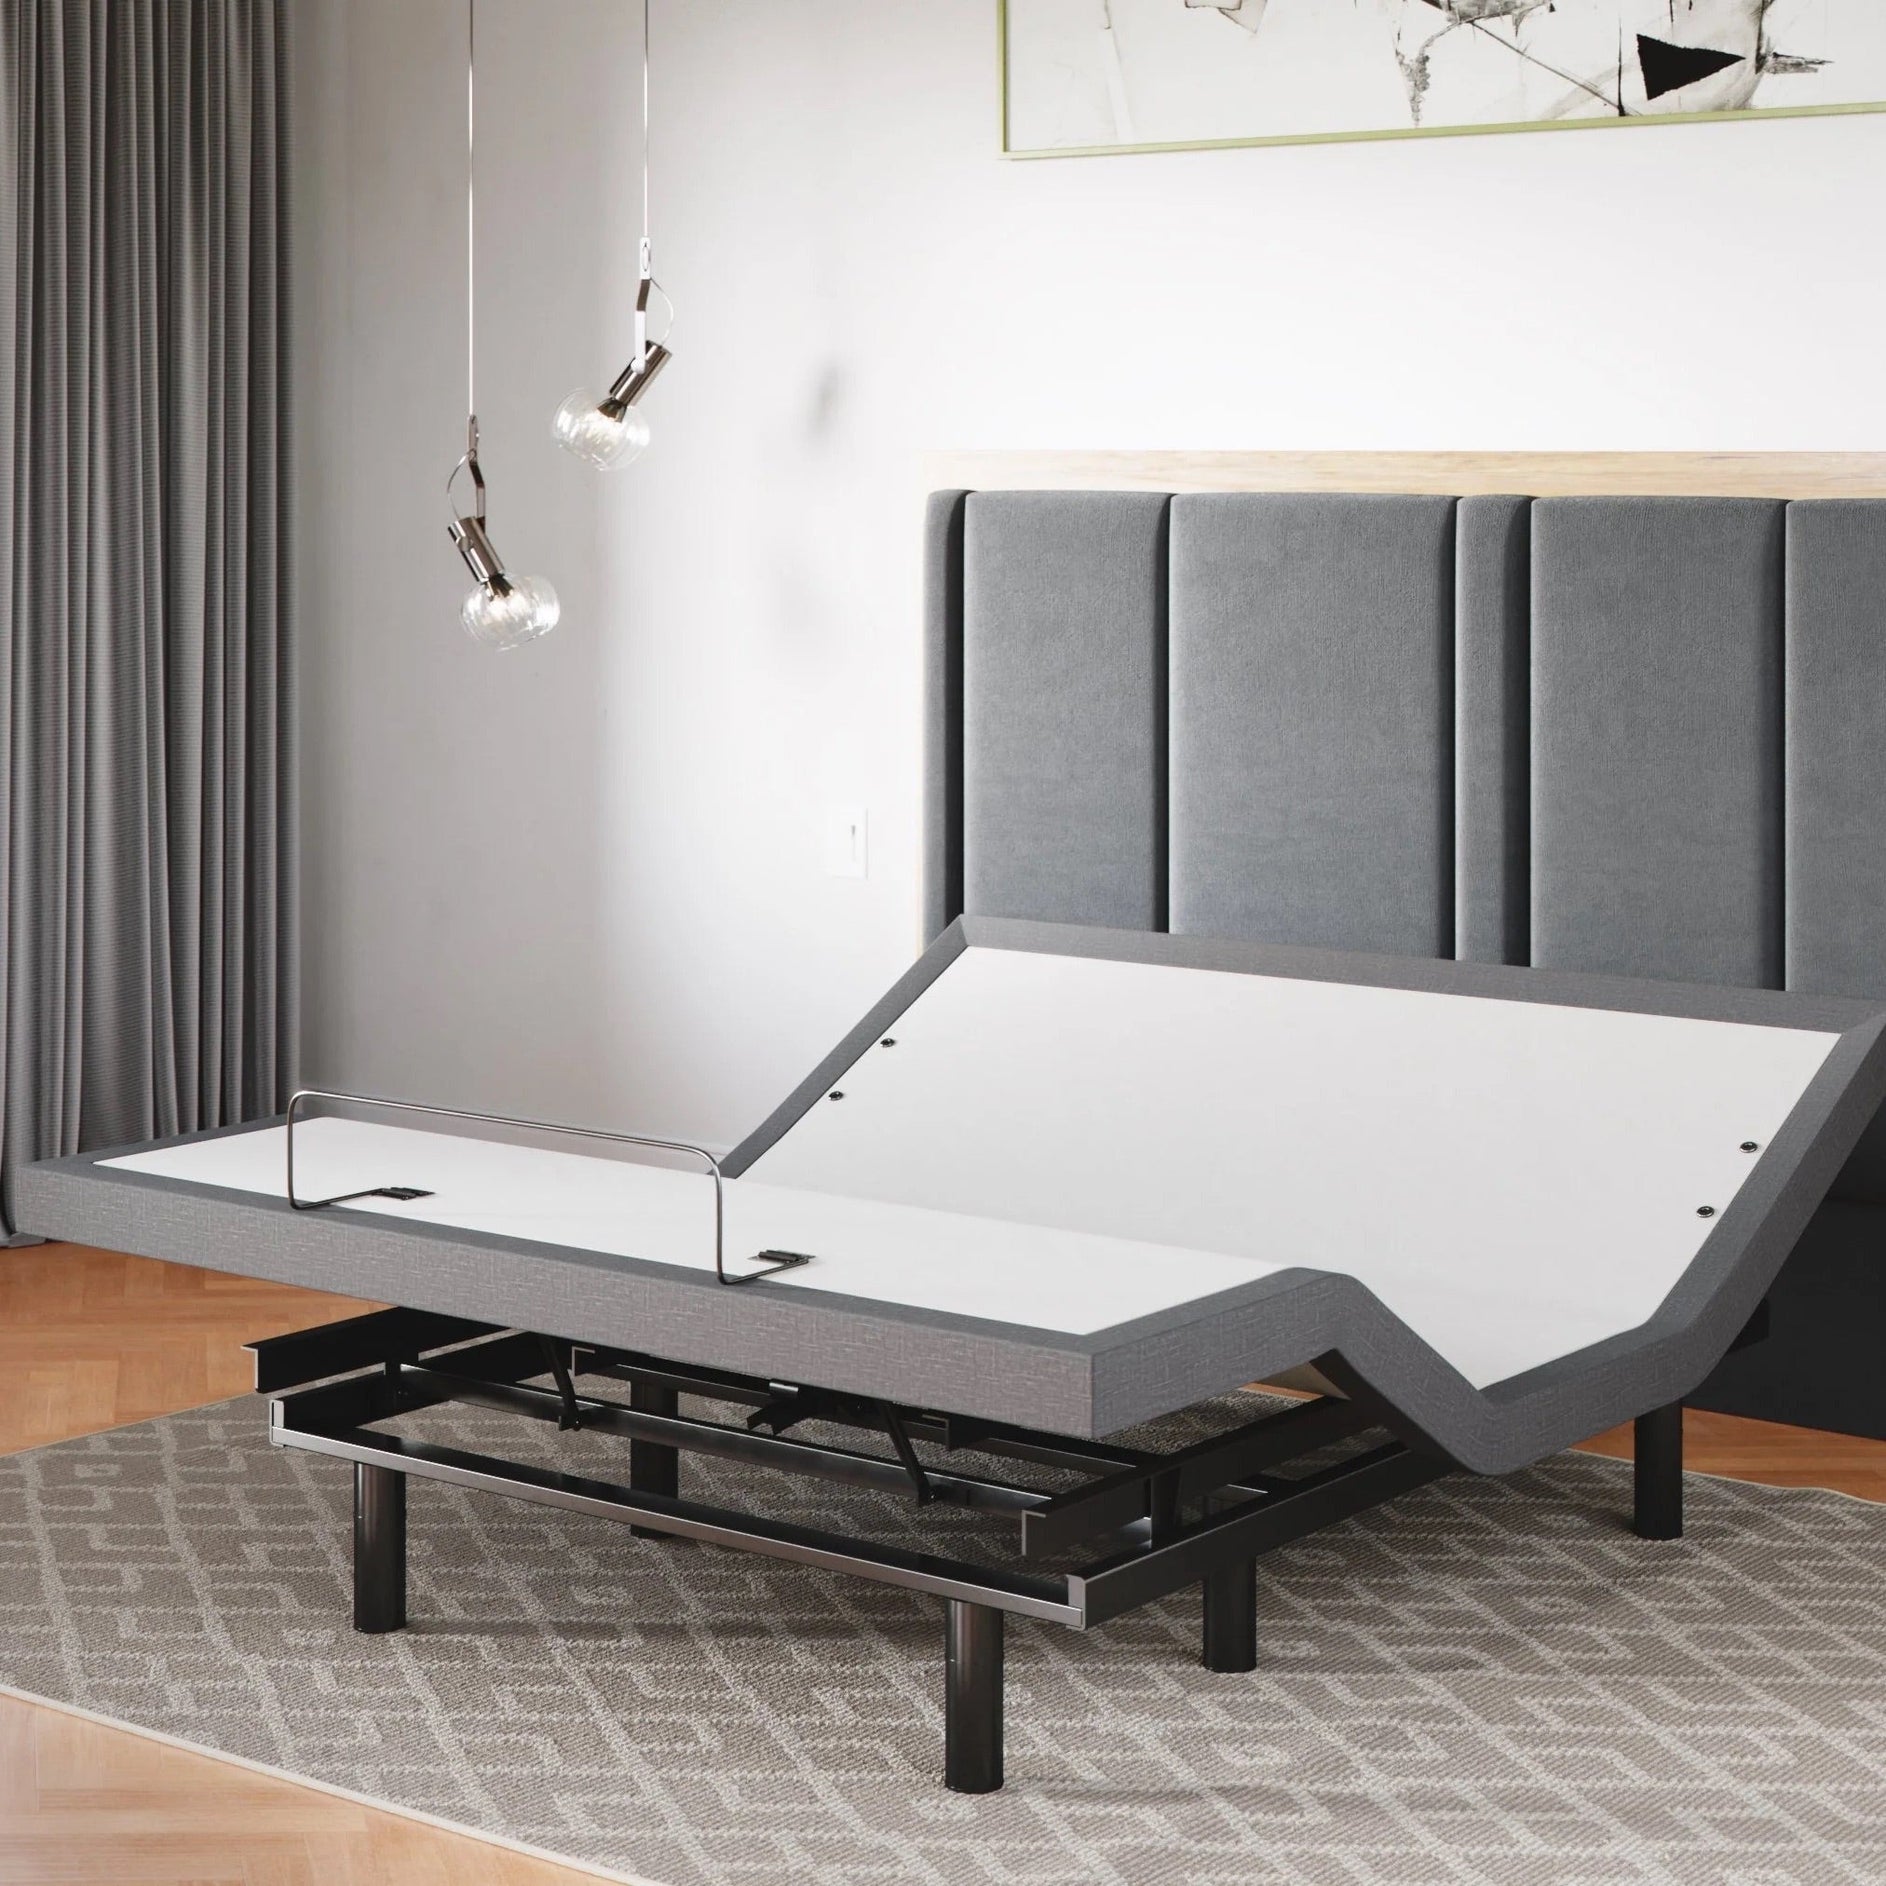 Classic Series Adjustable Bed Base Adjustable Base SVEN & SON® 